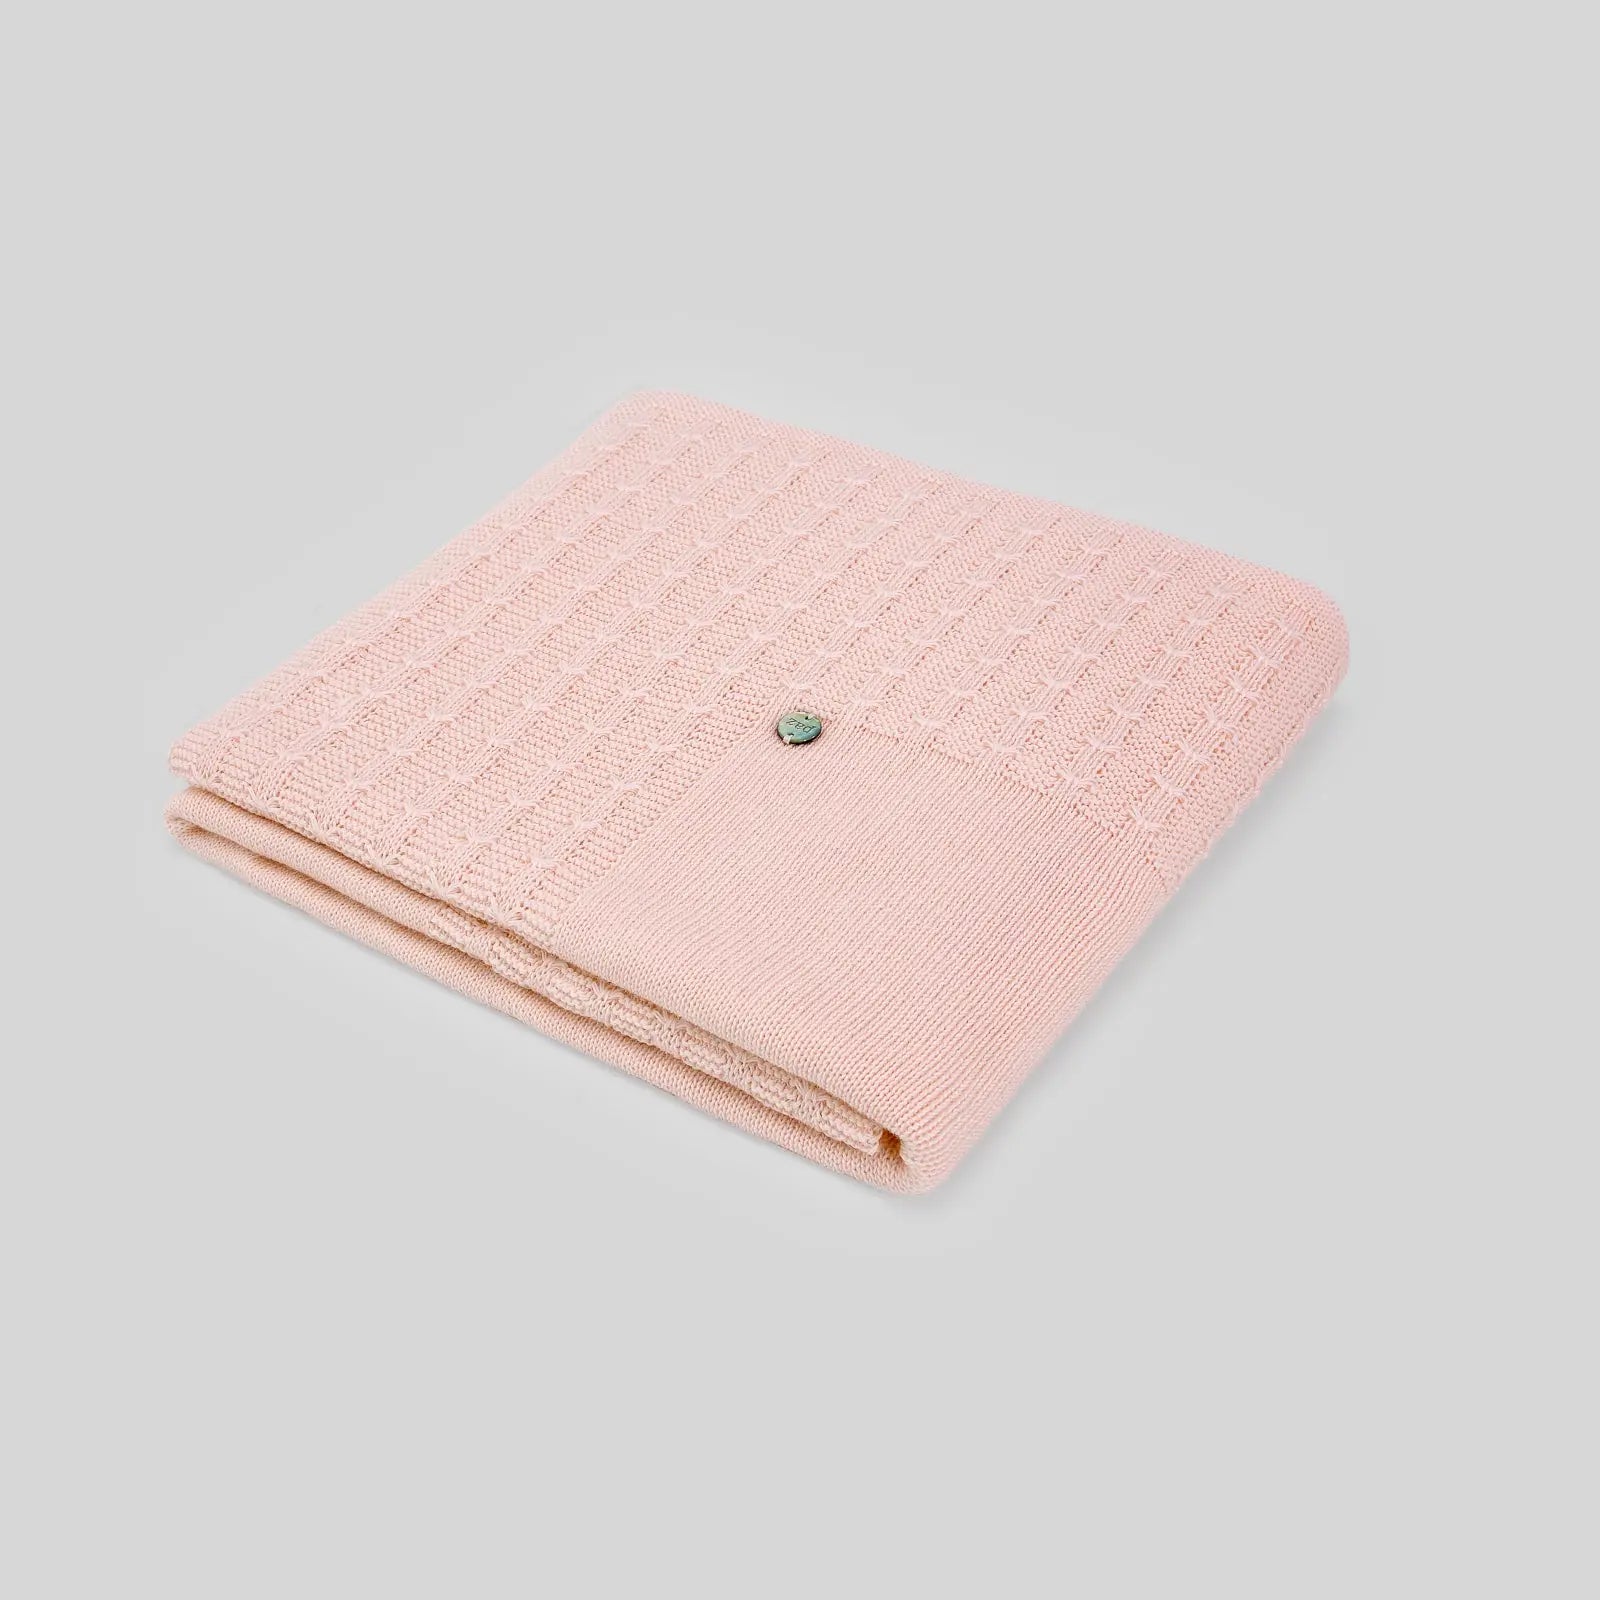 Blue Almonds Ltd Girl's Chalk Pink Knitted Blanket paz rodriguez